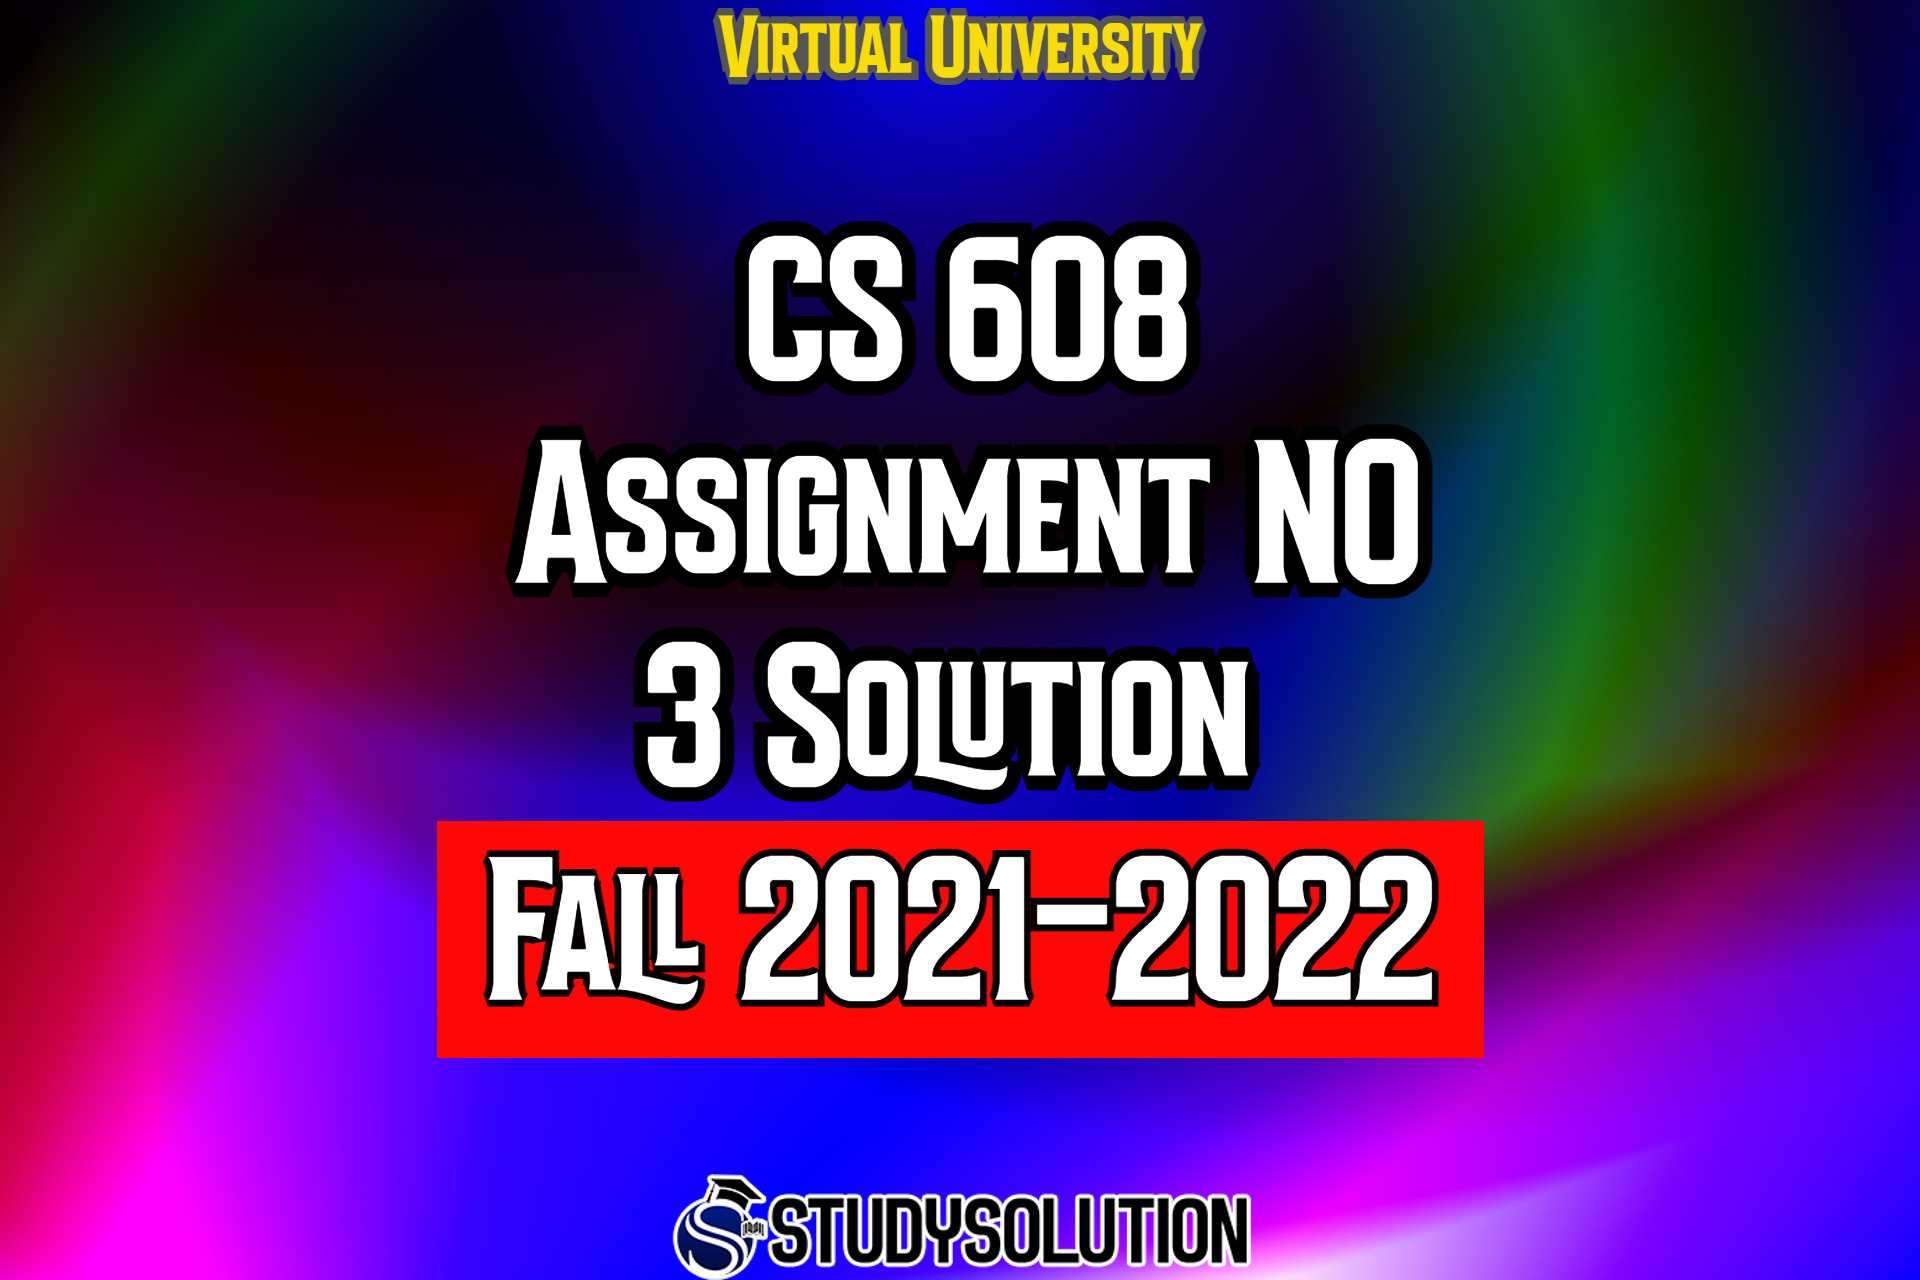 CS608 Assignment No 3 Solution Fall 2022